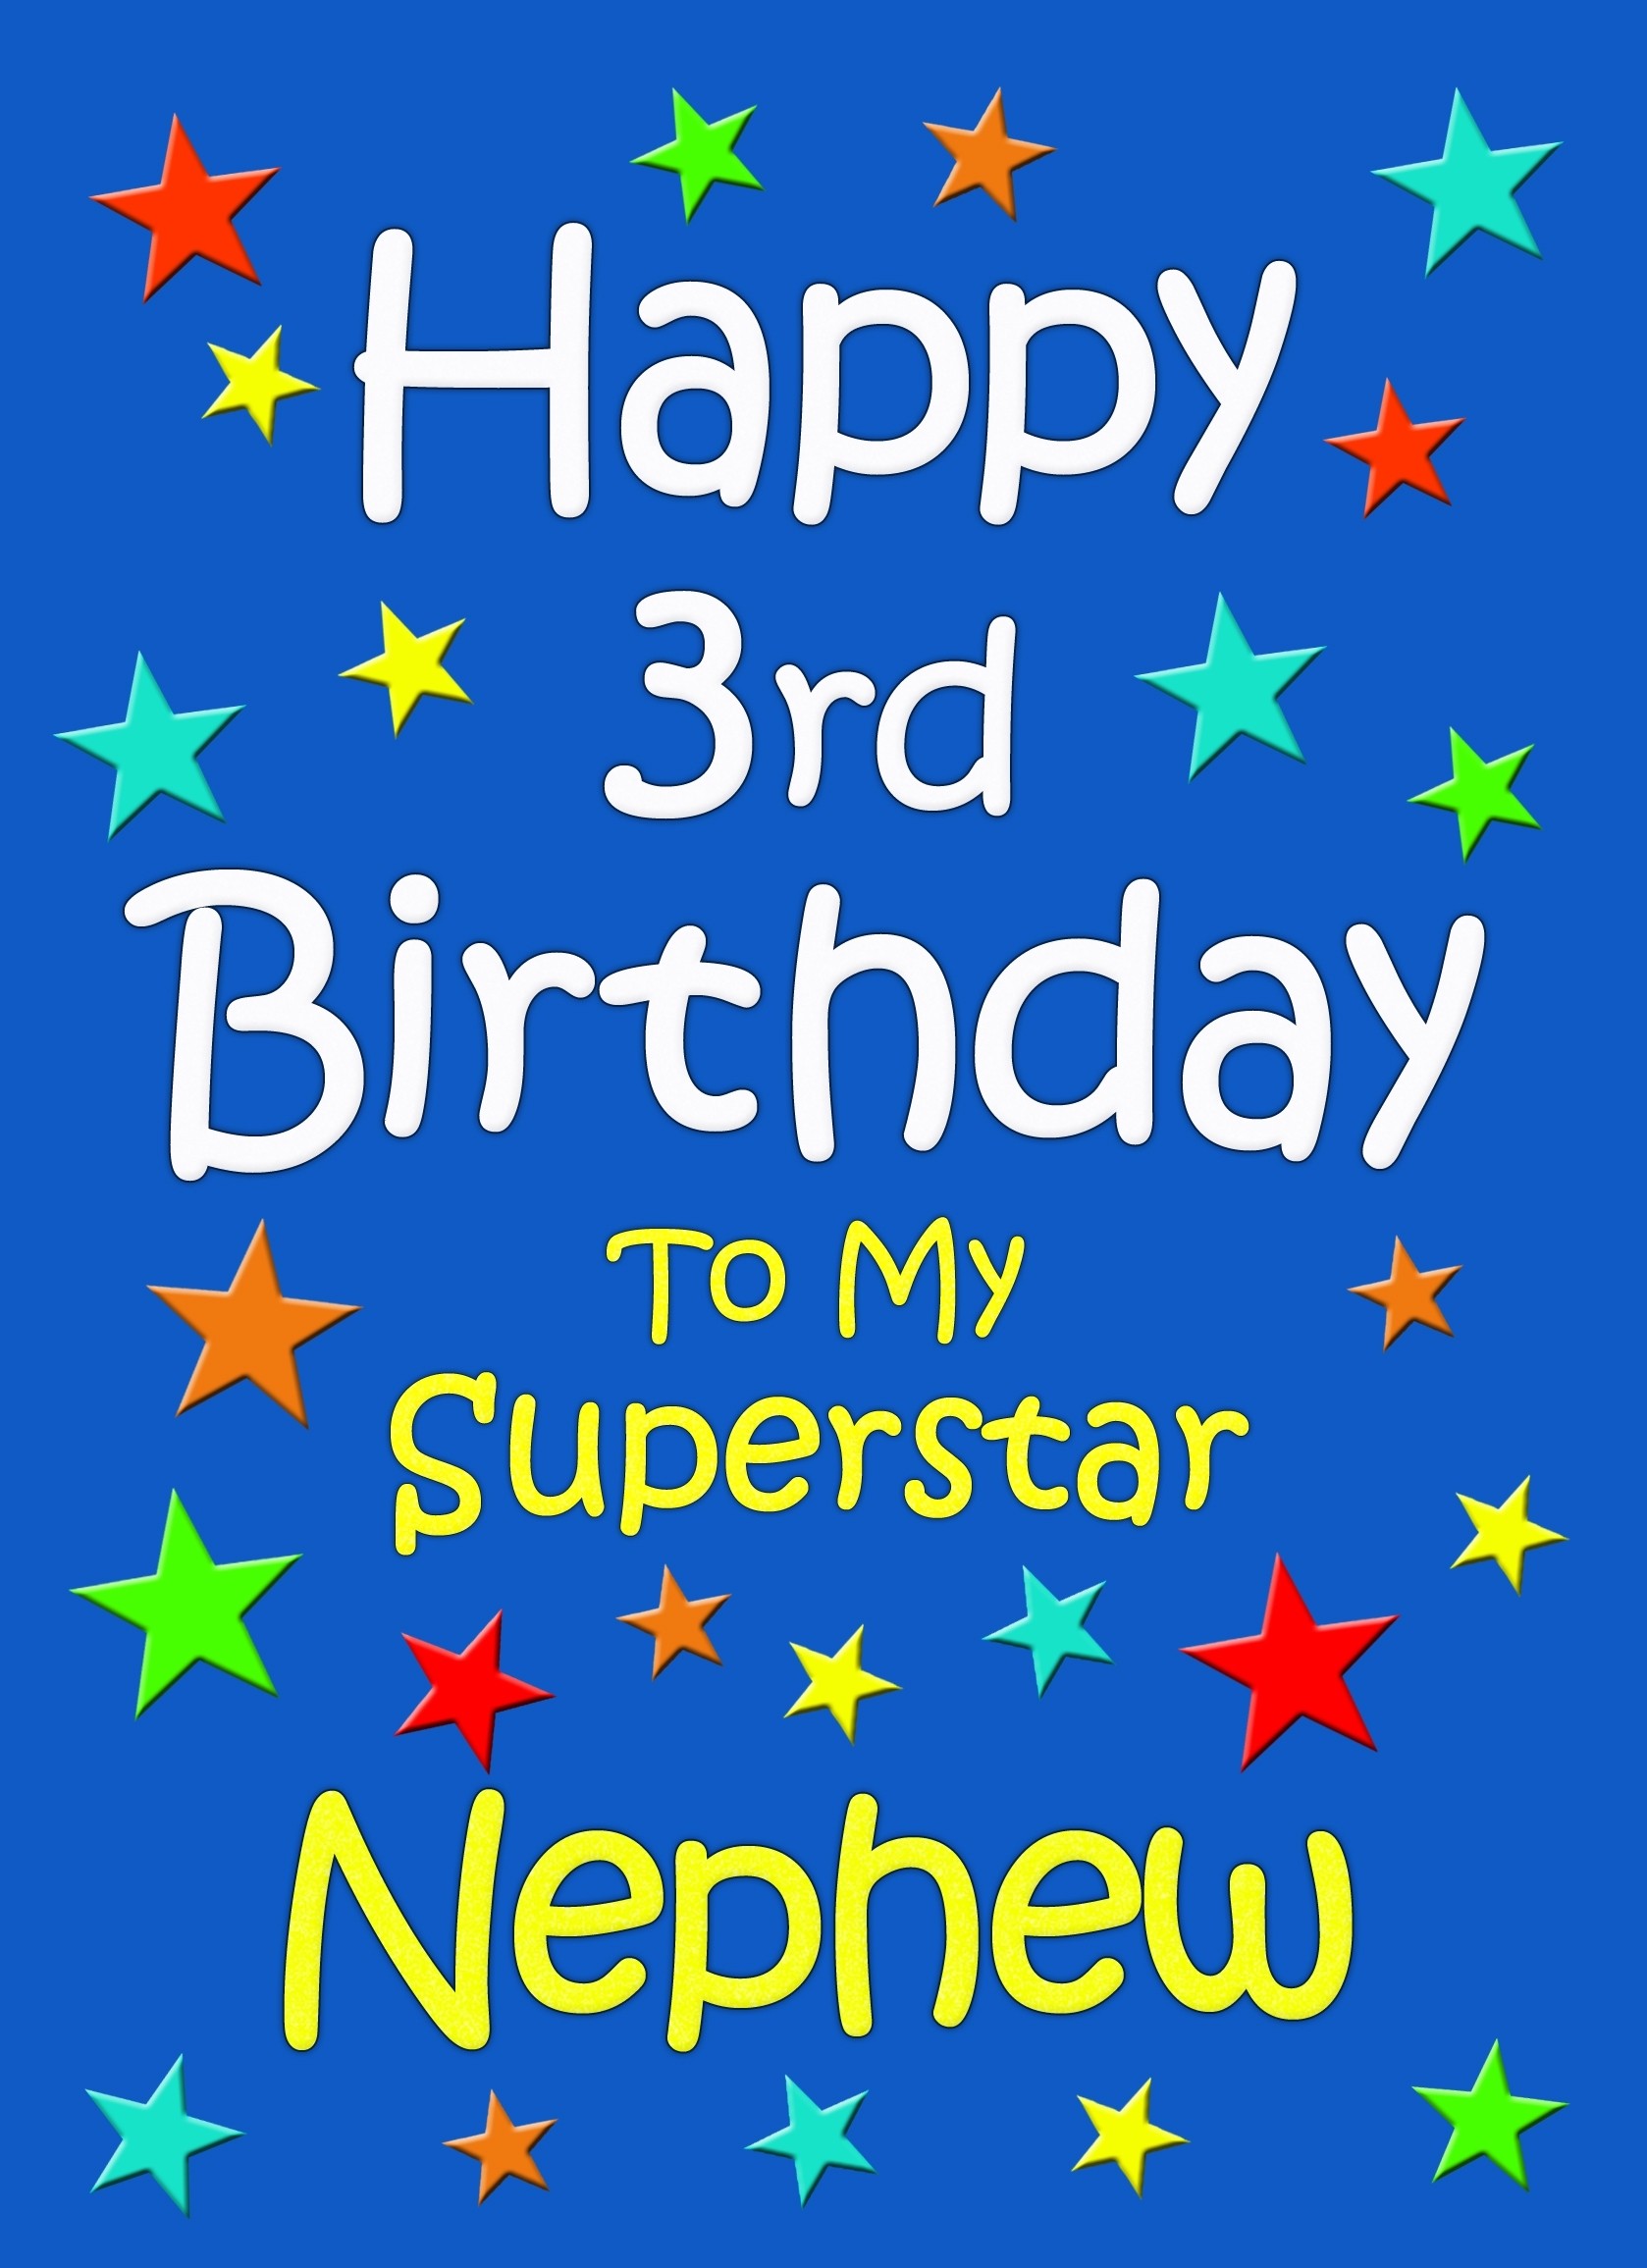 Nephew 3rd Birthday Card (Blue)